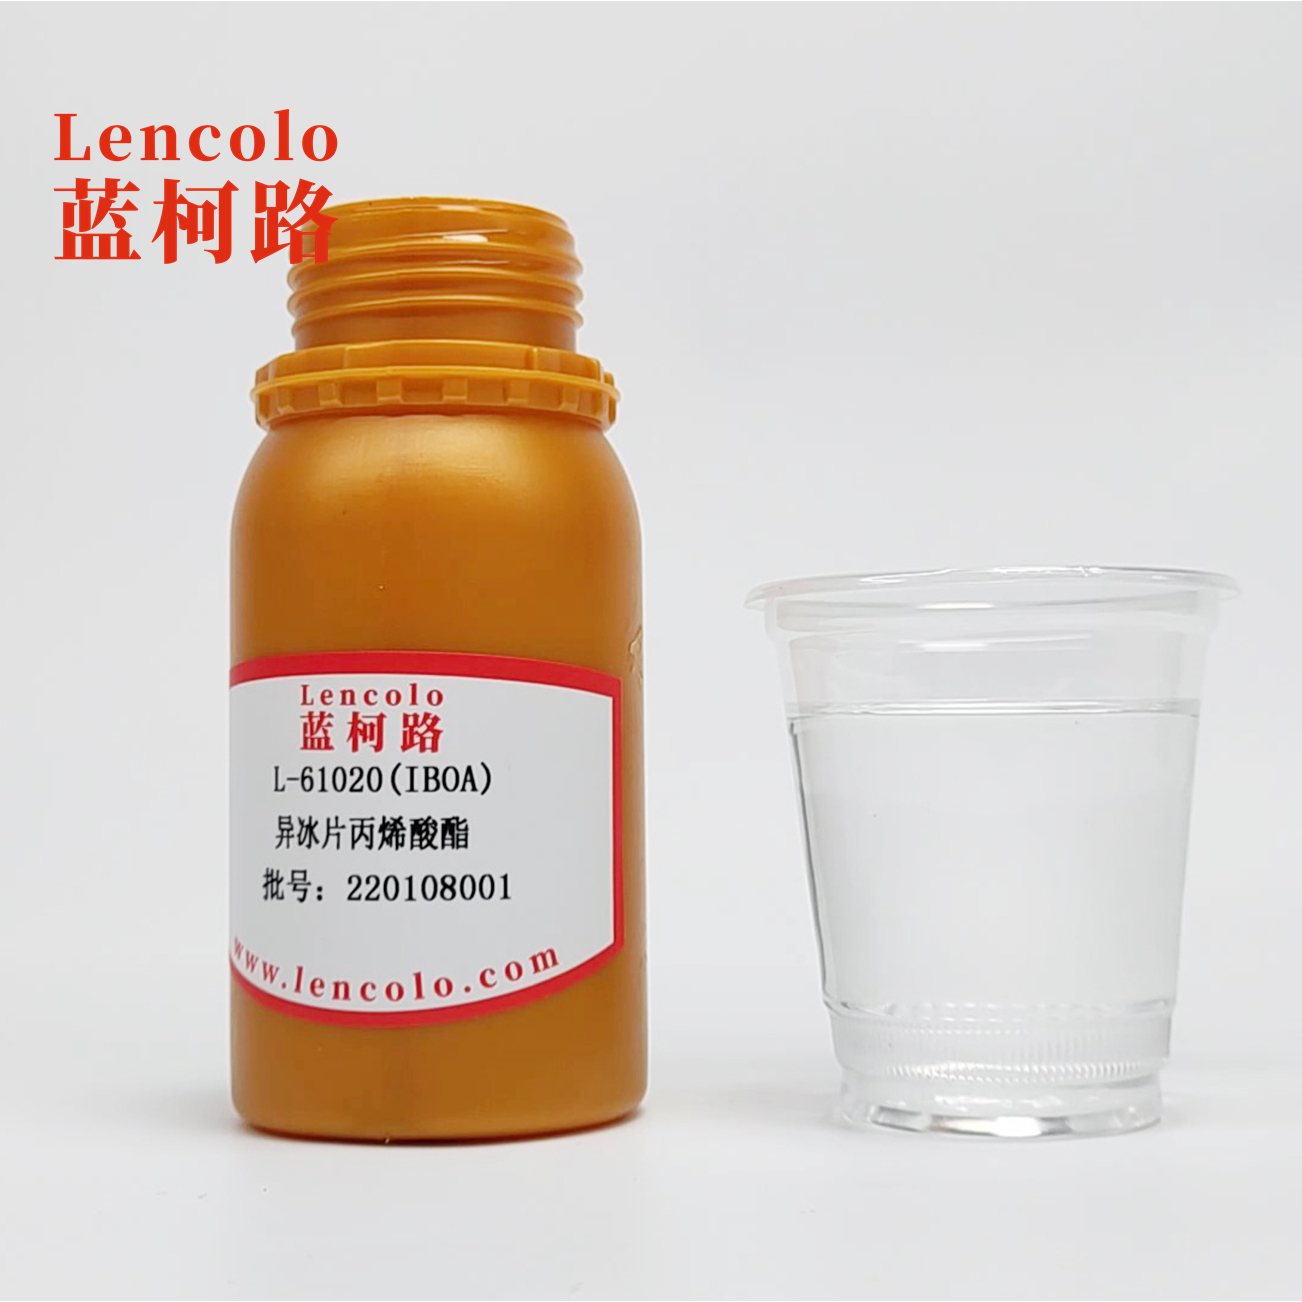 L-61020(IBOA) Isobornyl acrylate CAS 5888-33-5 Colorless or yellow transparent liquid monomer resin has high TG